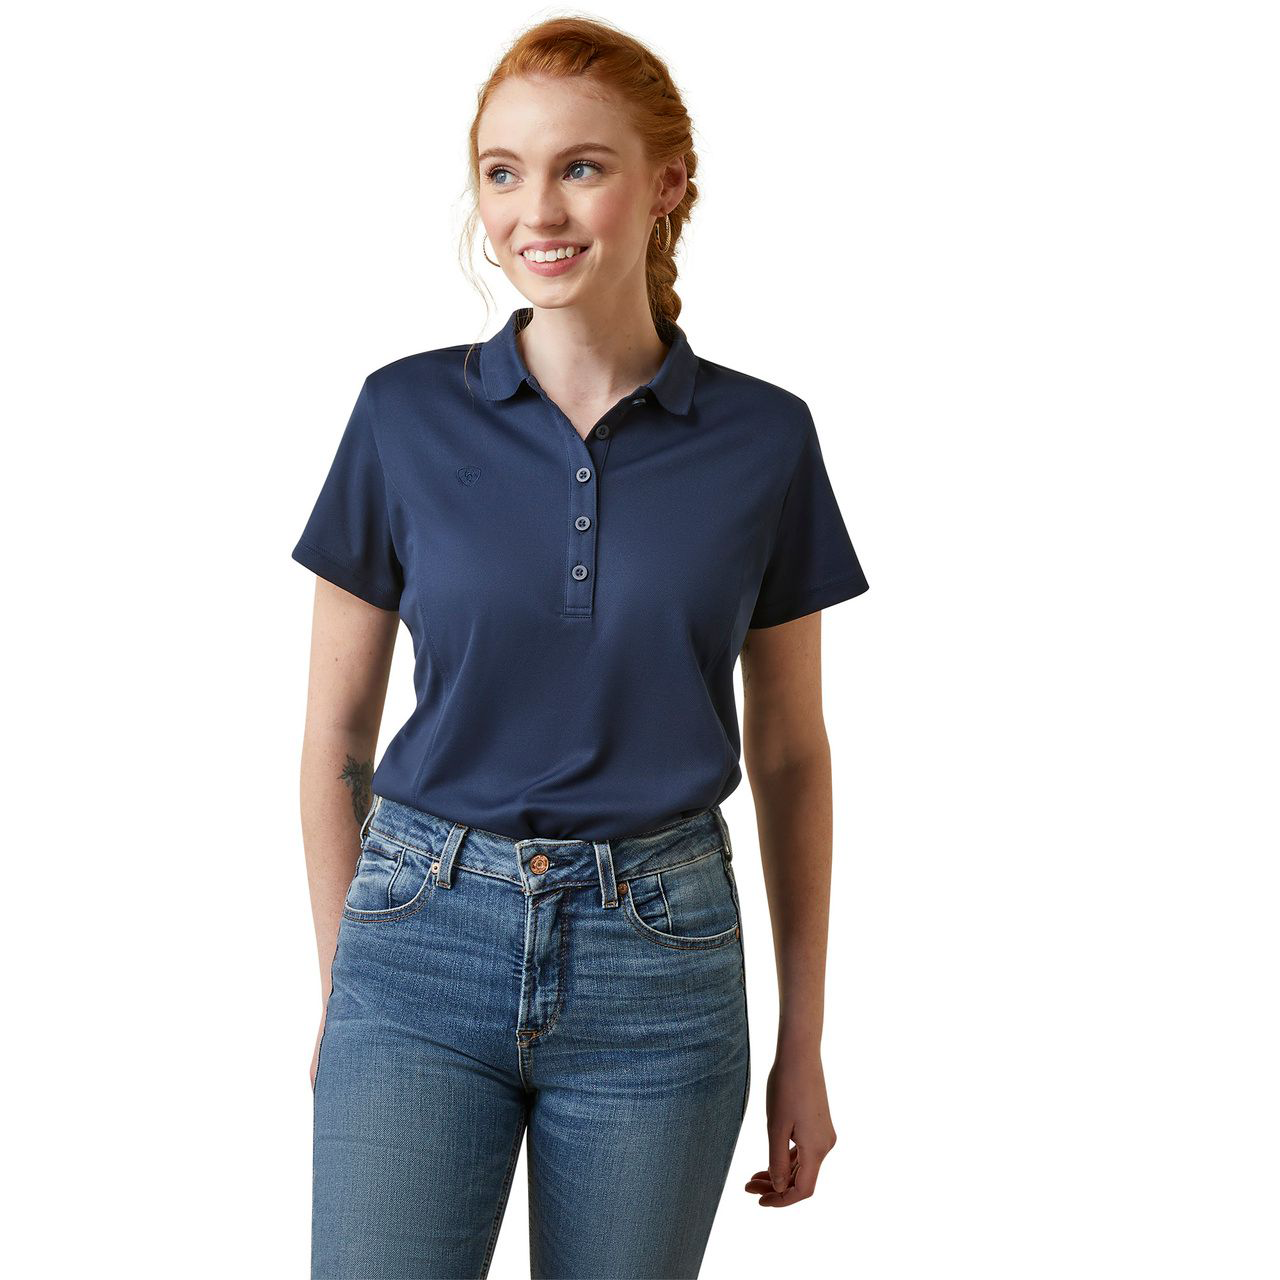 Ariat TEK Short-Sleeve Polo for Ladies - Navy - XL